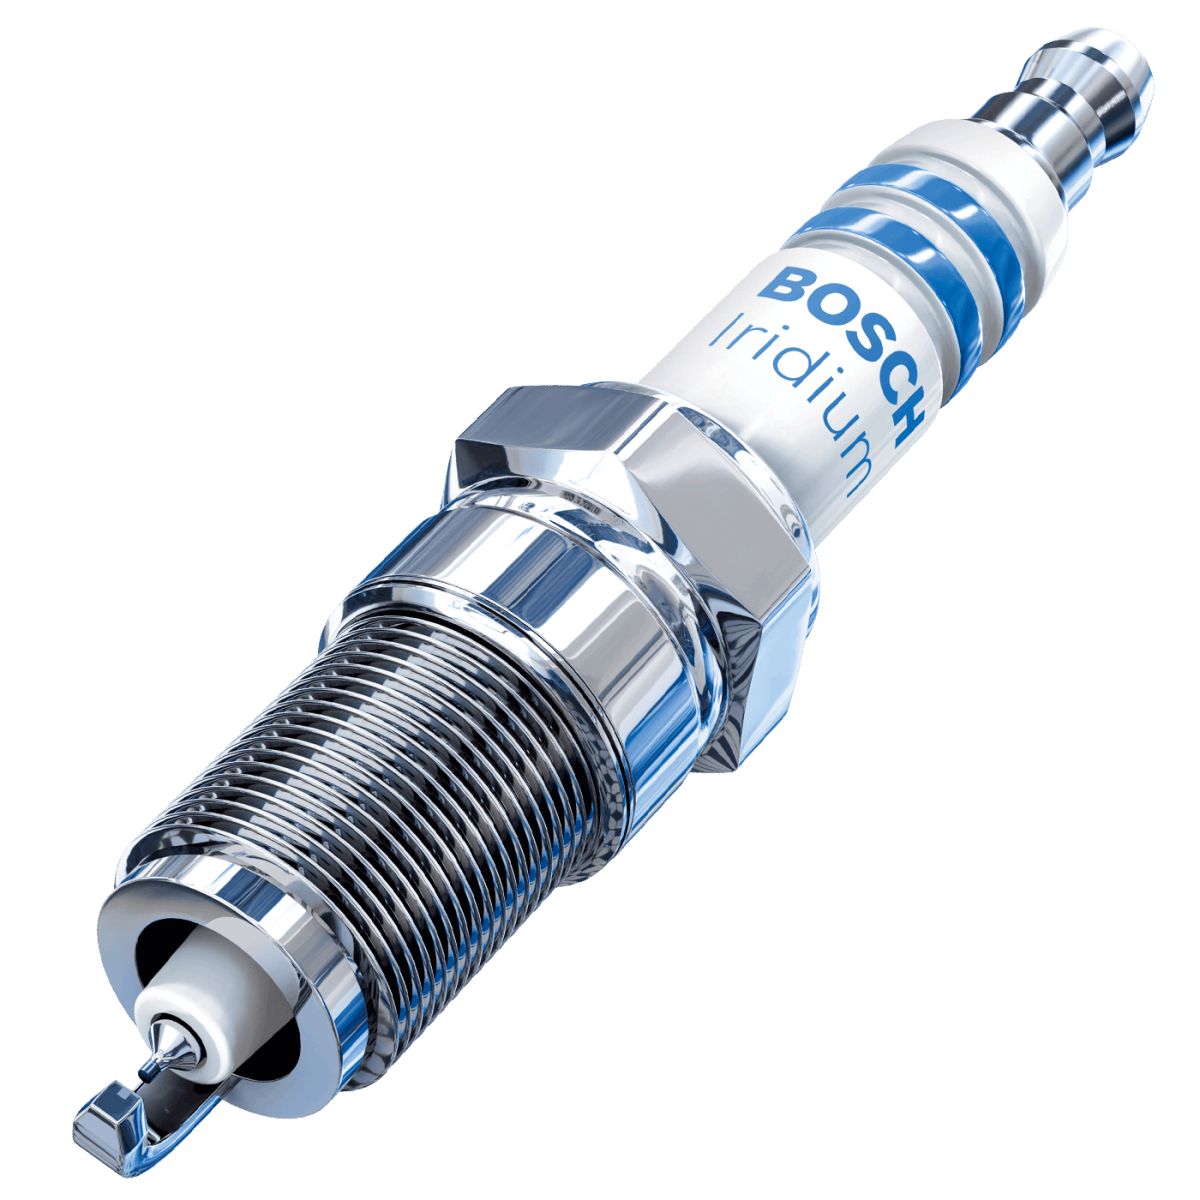 Iridium spark plug from Bosch